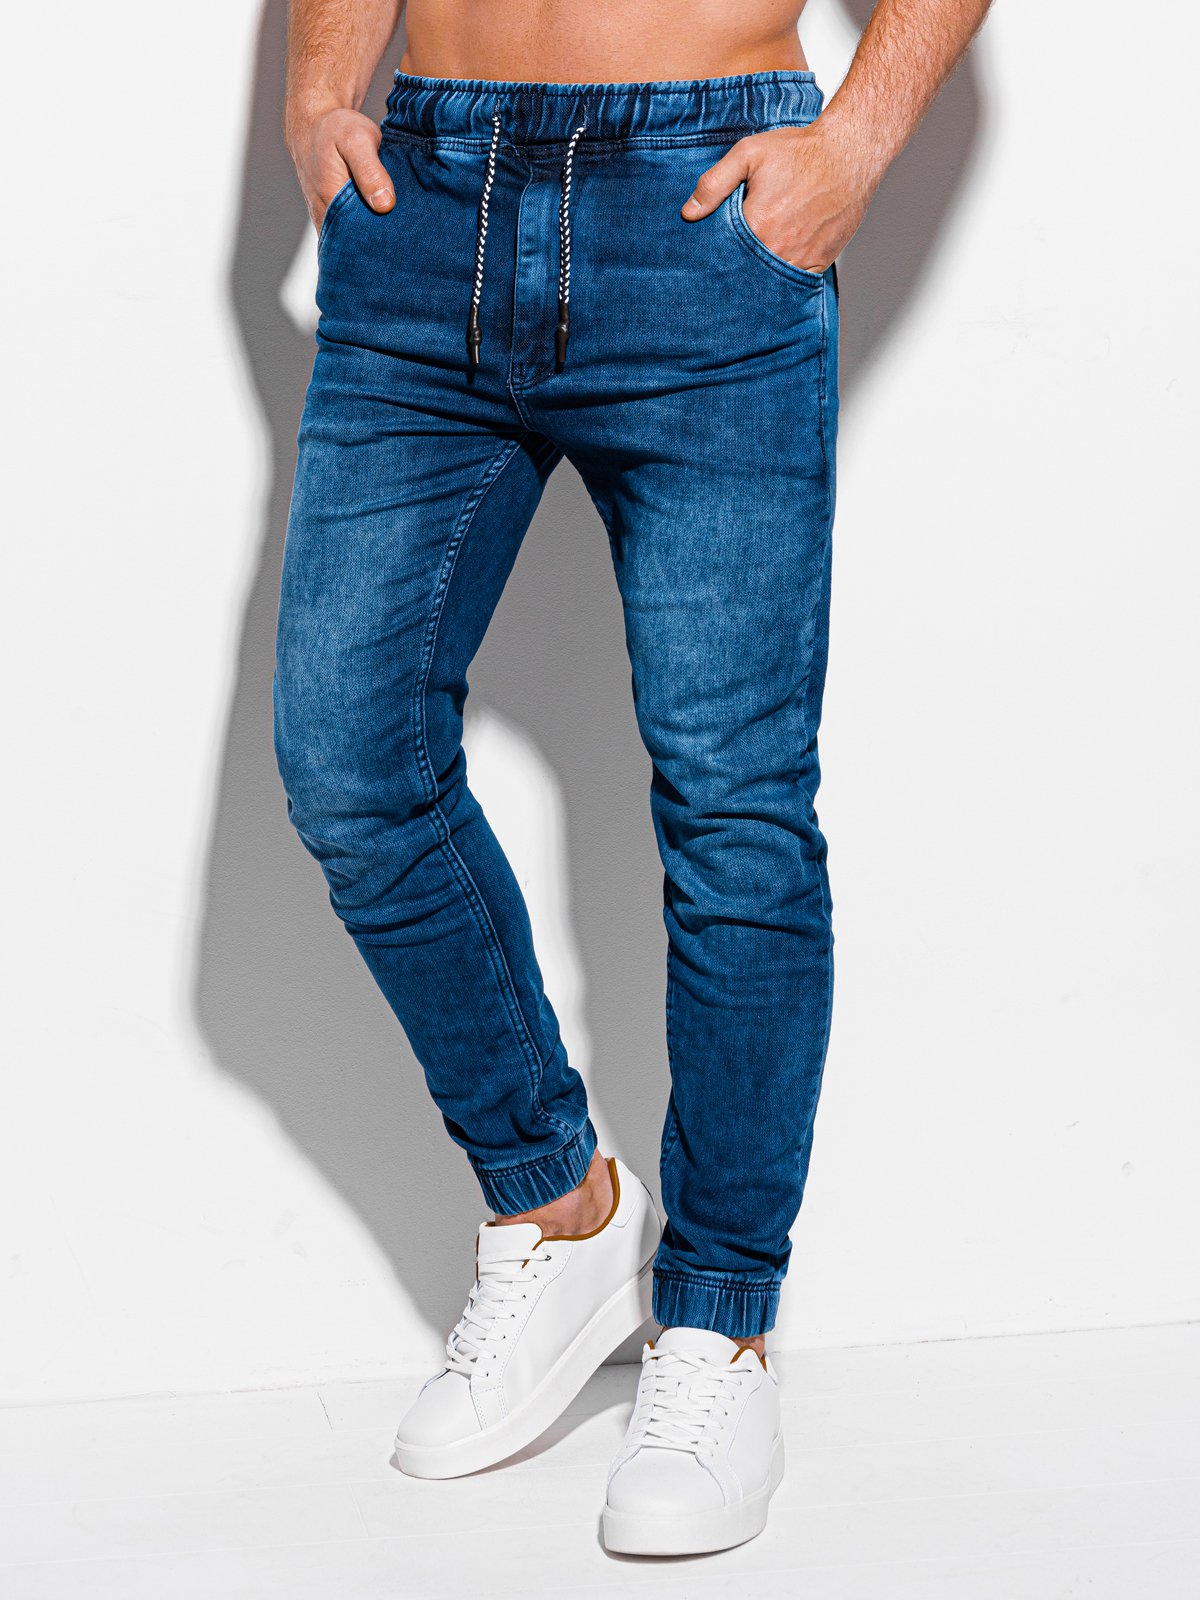 Men's jeans joggers P868 - dark blue | MODONE wholesale - Clothing For Men